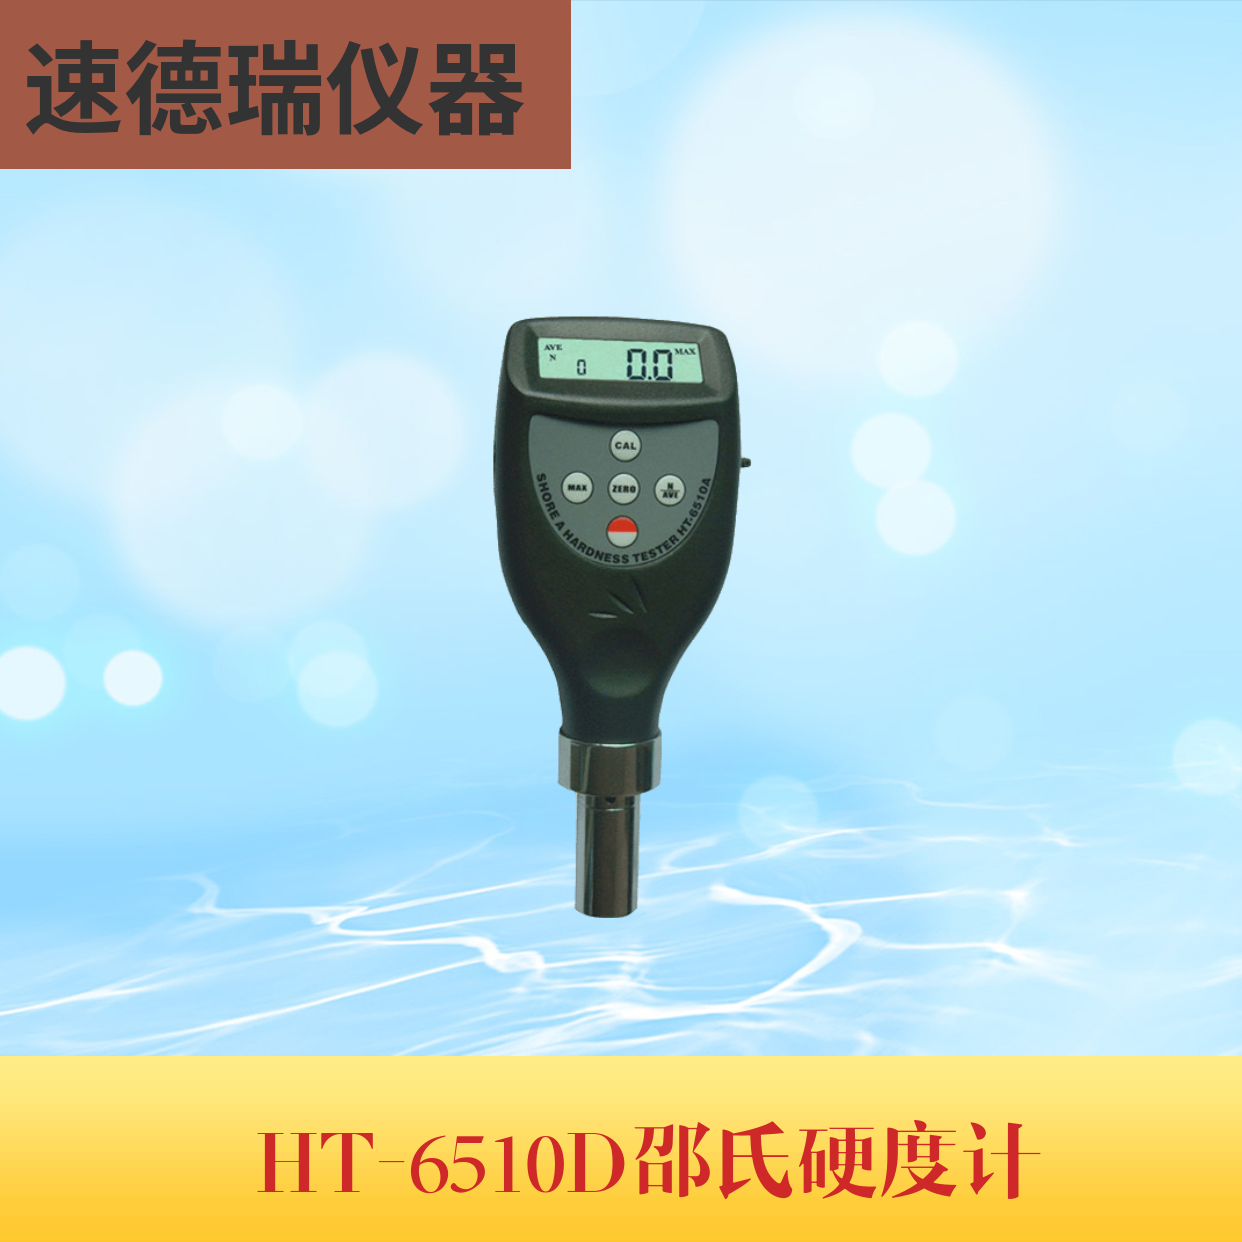 HT-6510D 邵氏硬度計